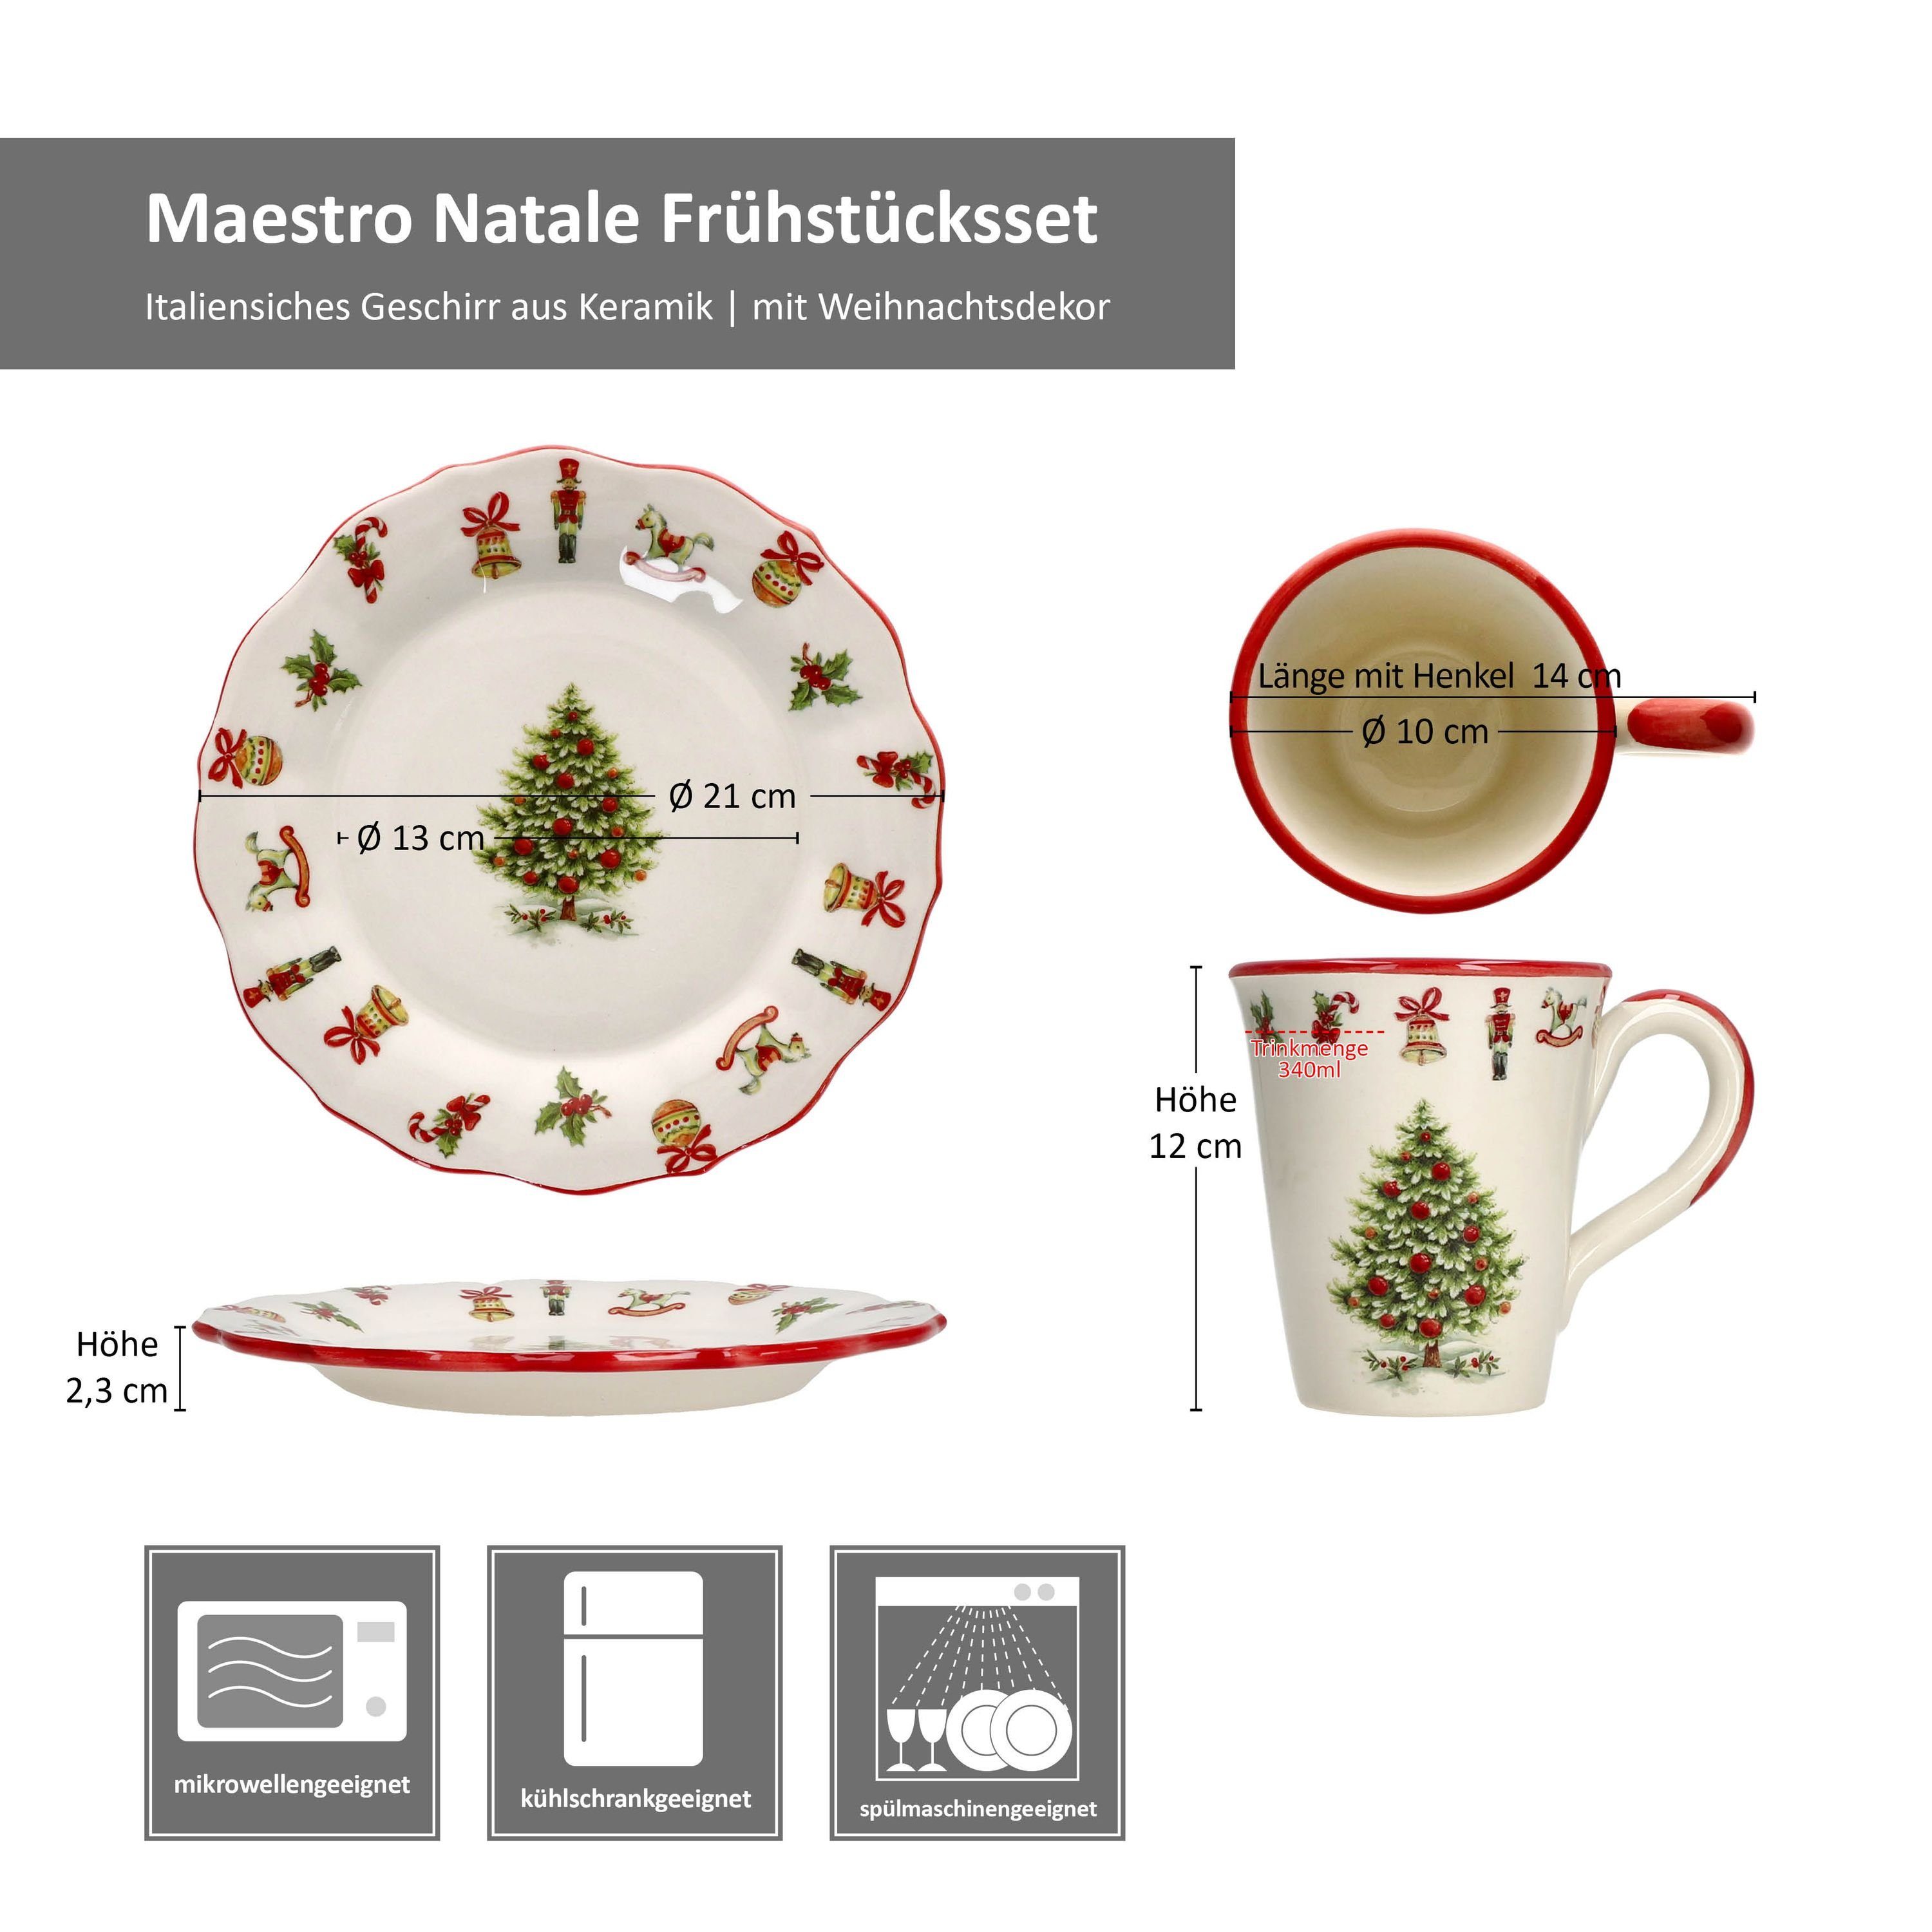 MamboCat Frühstücks-Geschirrset Maestro Natale 4tlg Frühstücksset Weihnachten, Teller Keramik Pers Keramik 2